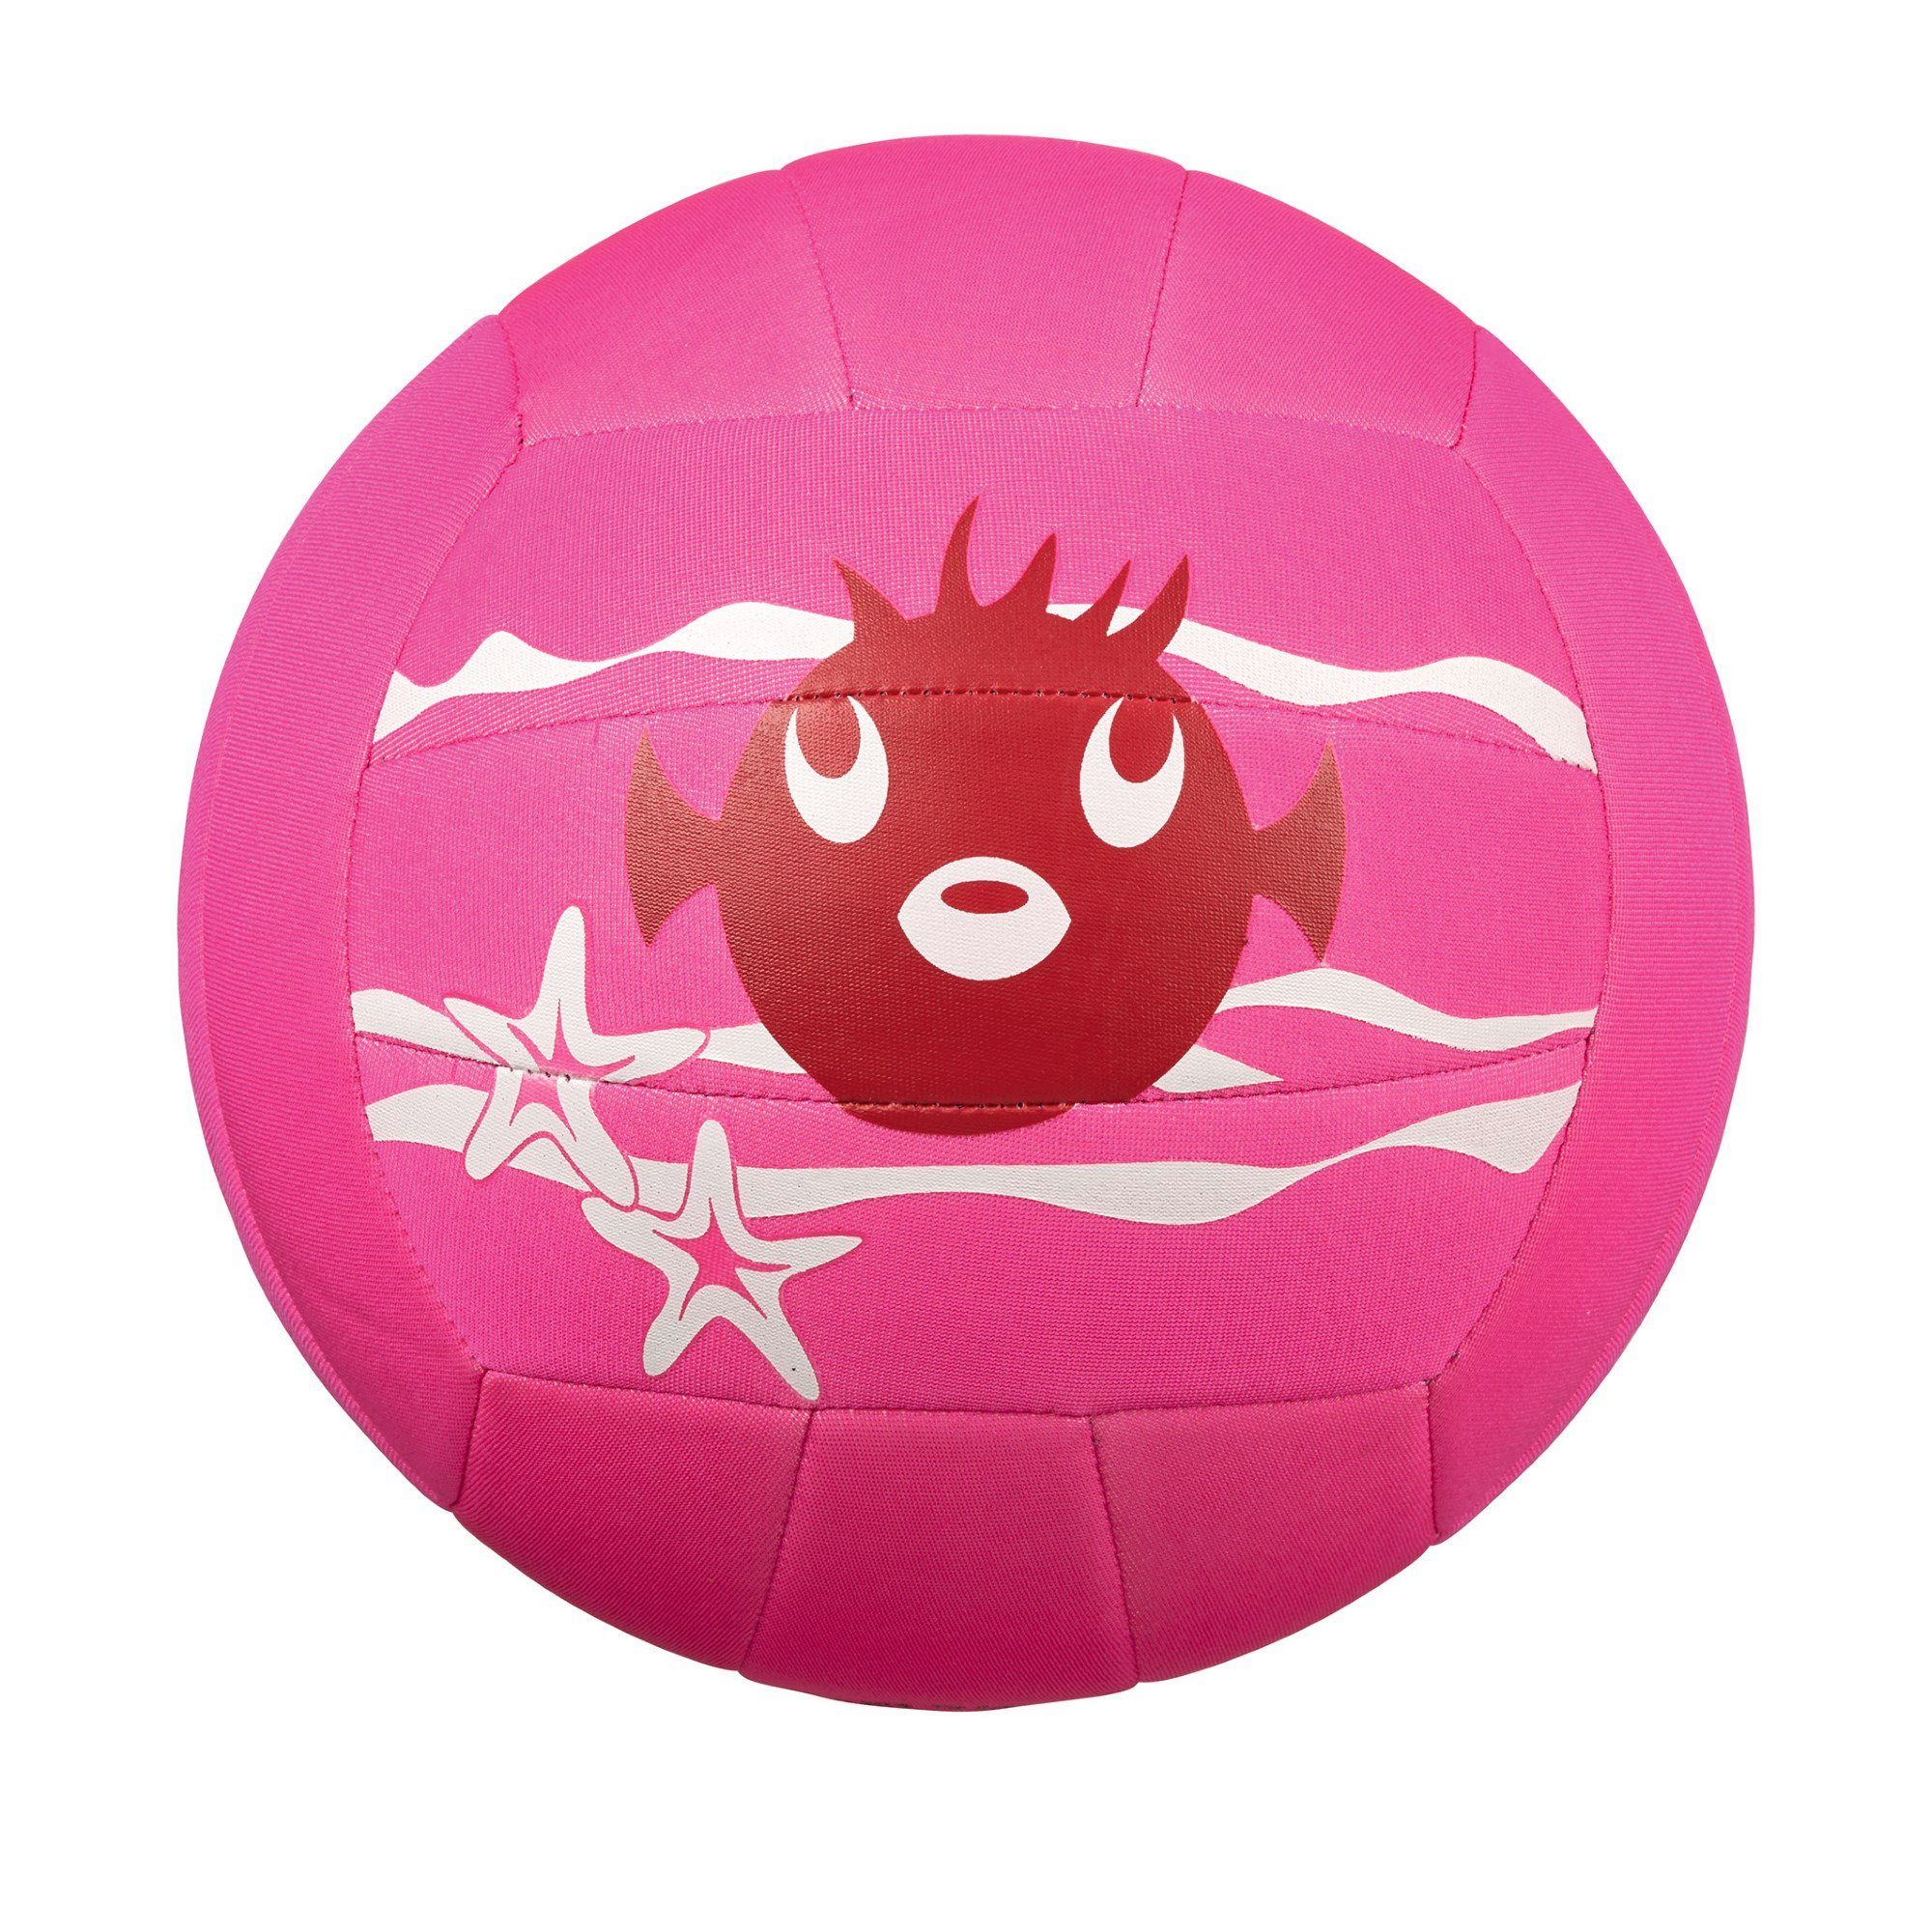 21cm Beermann Ball pink BECO Spielball Beco SEALIFE Neopren Beach